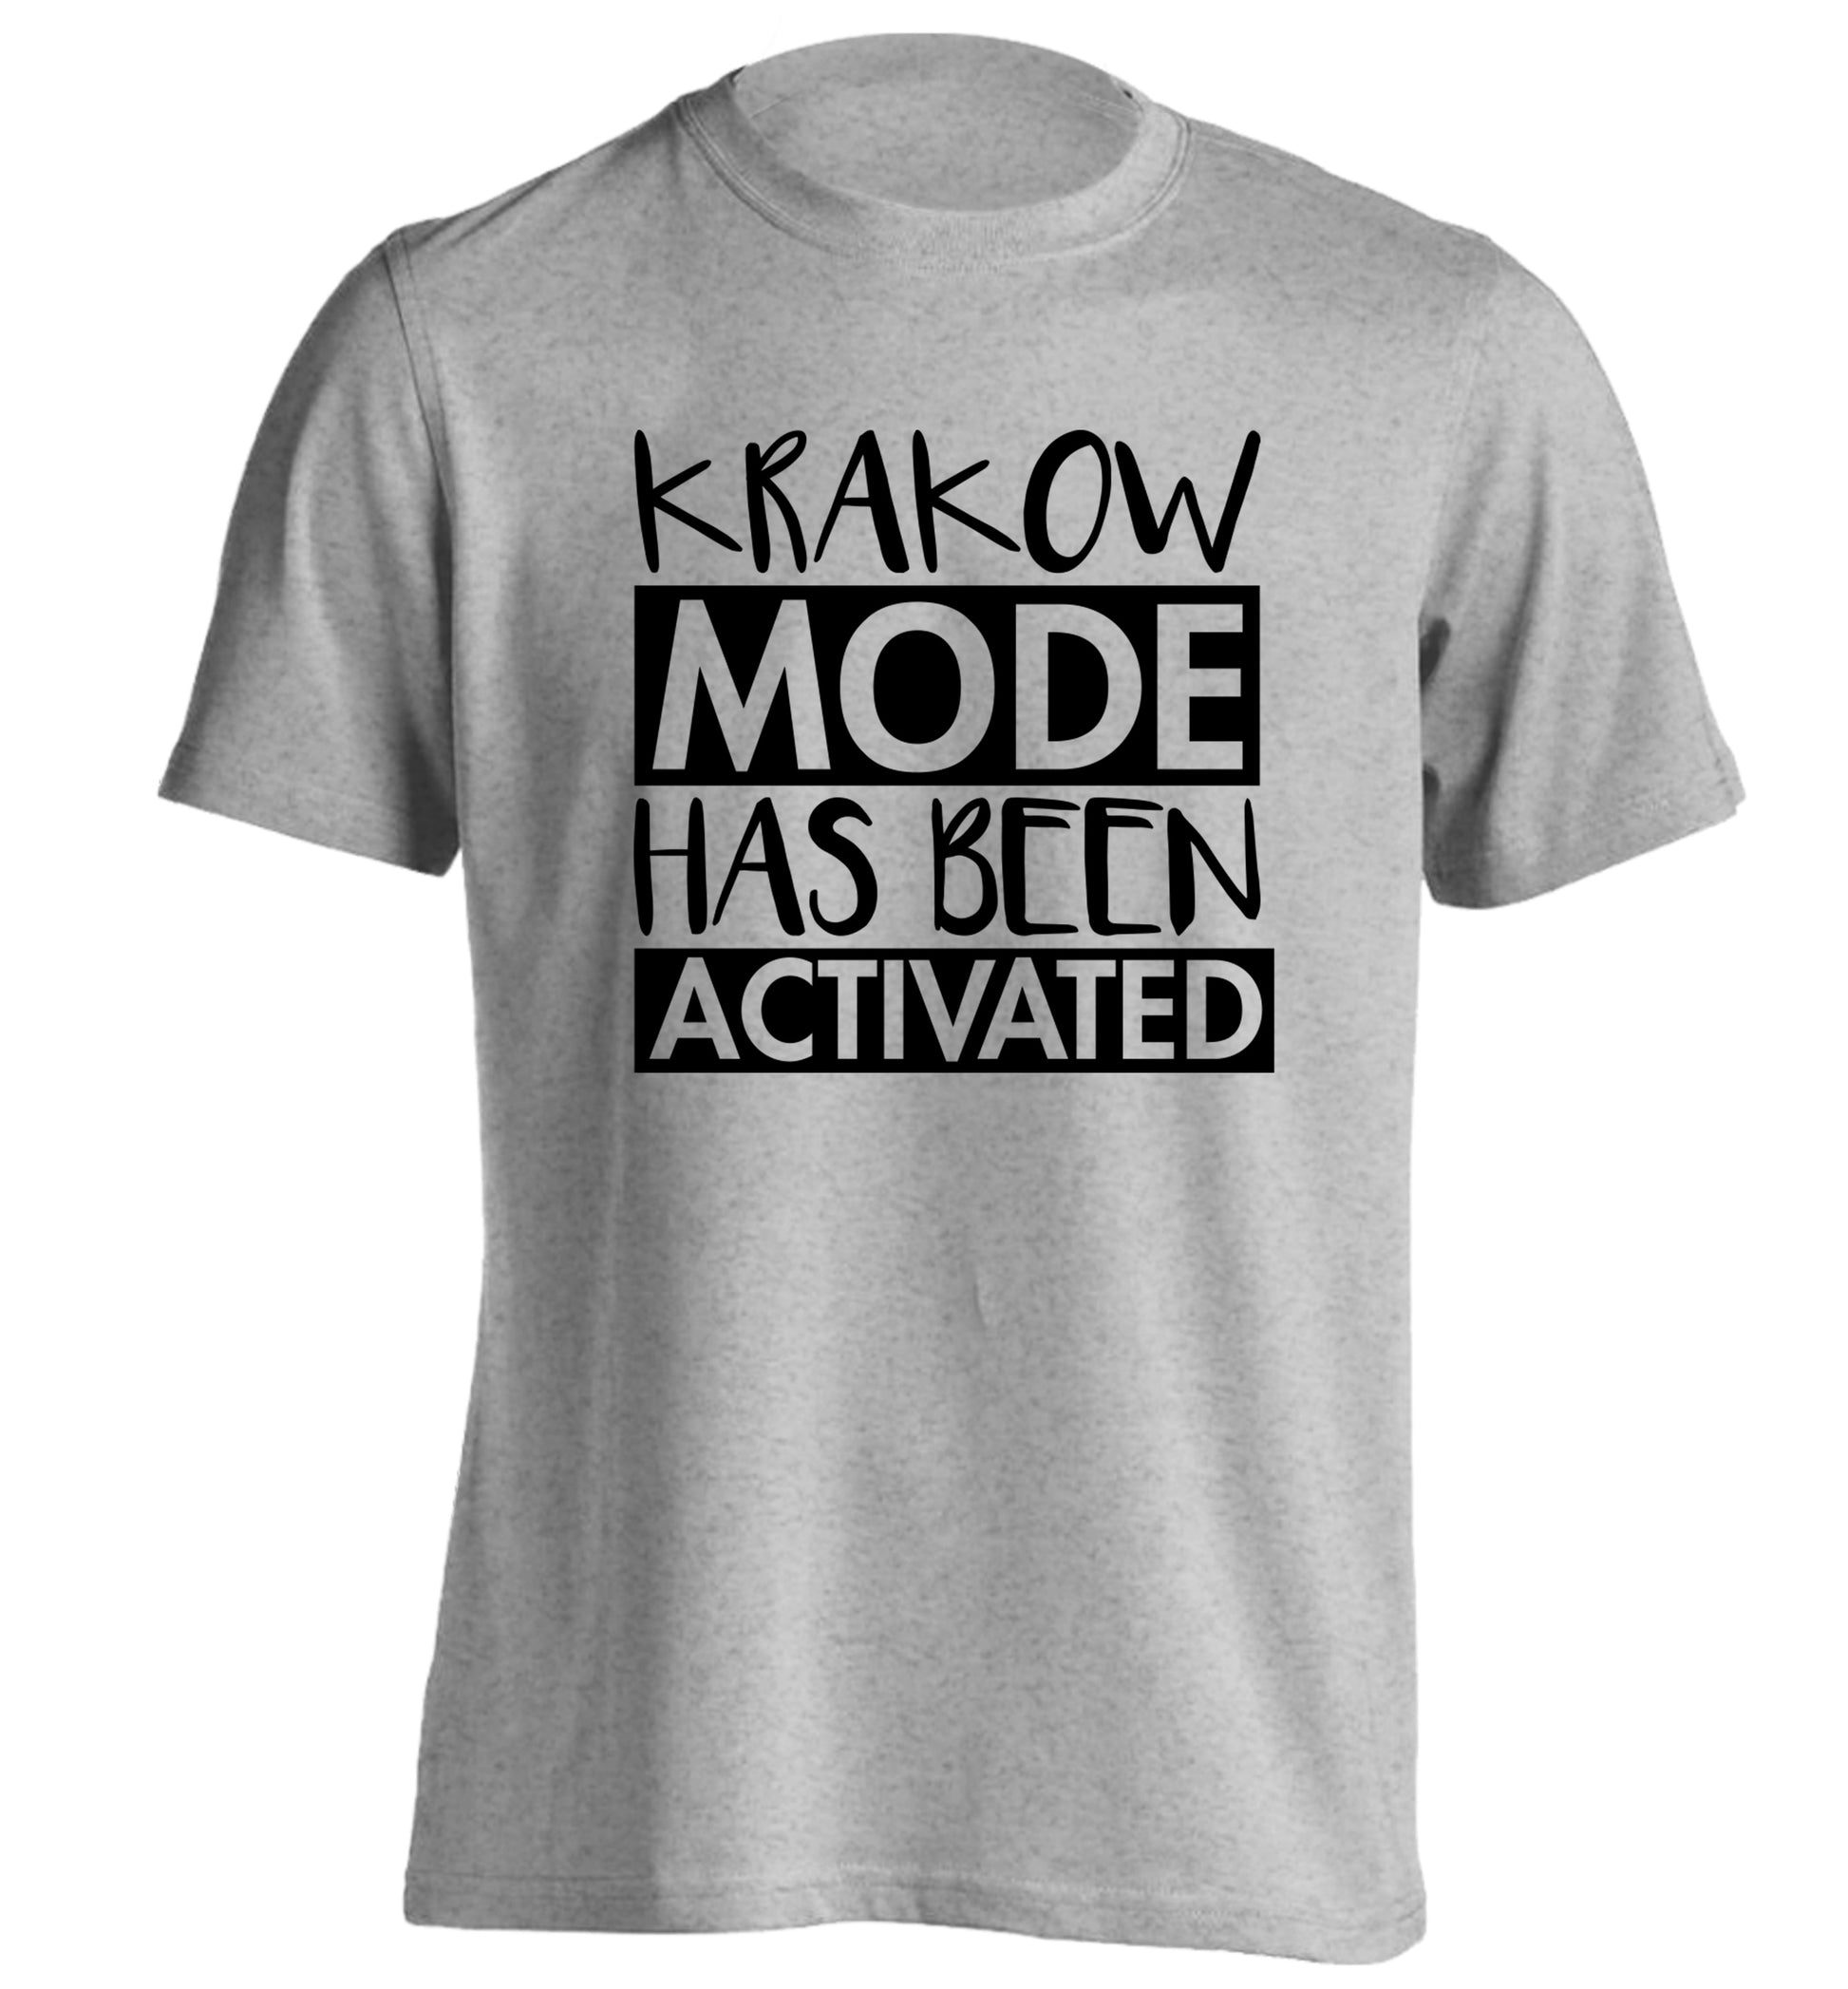 Krakow mode has been activated adults unisex grey Tshirt 2XL